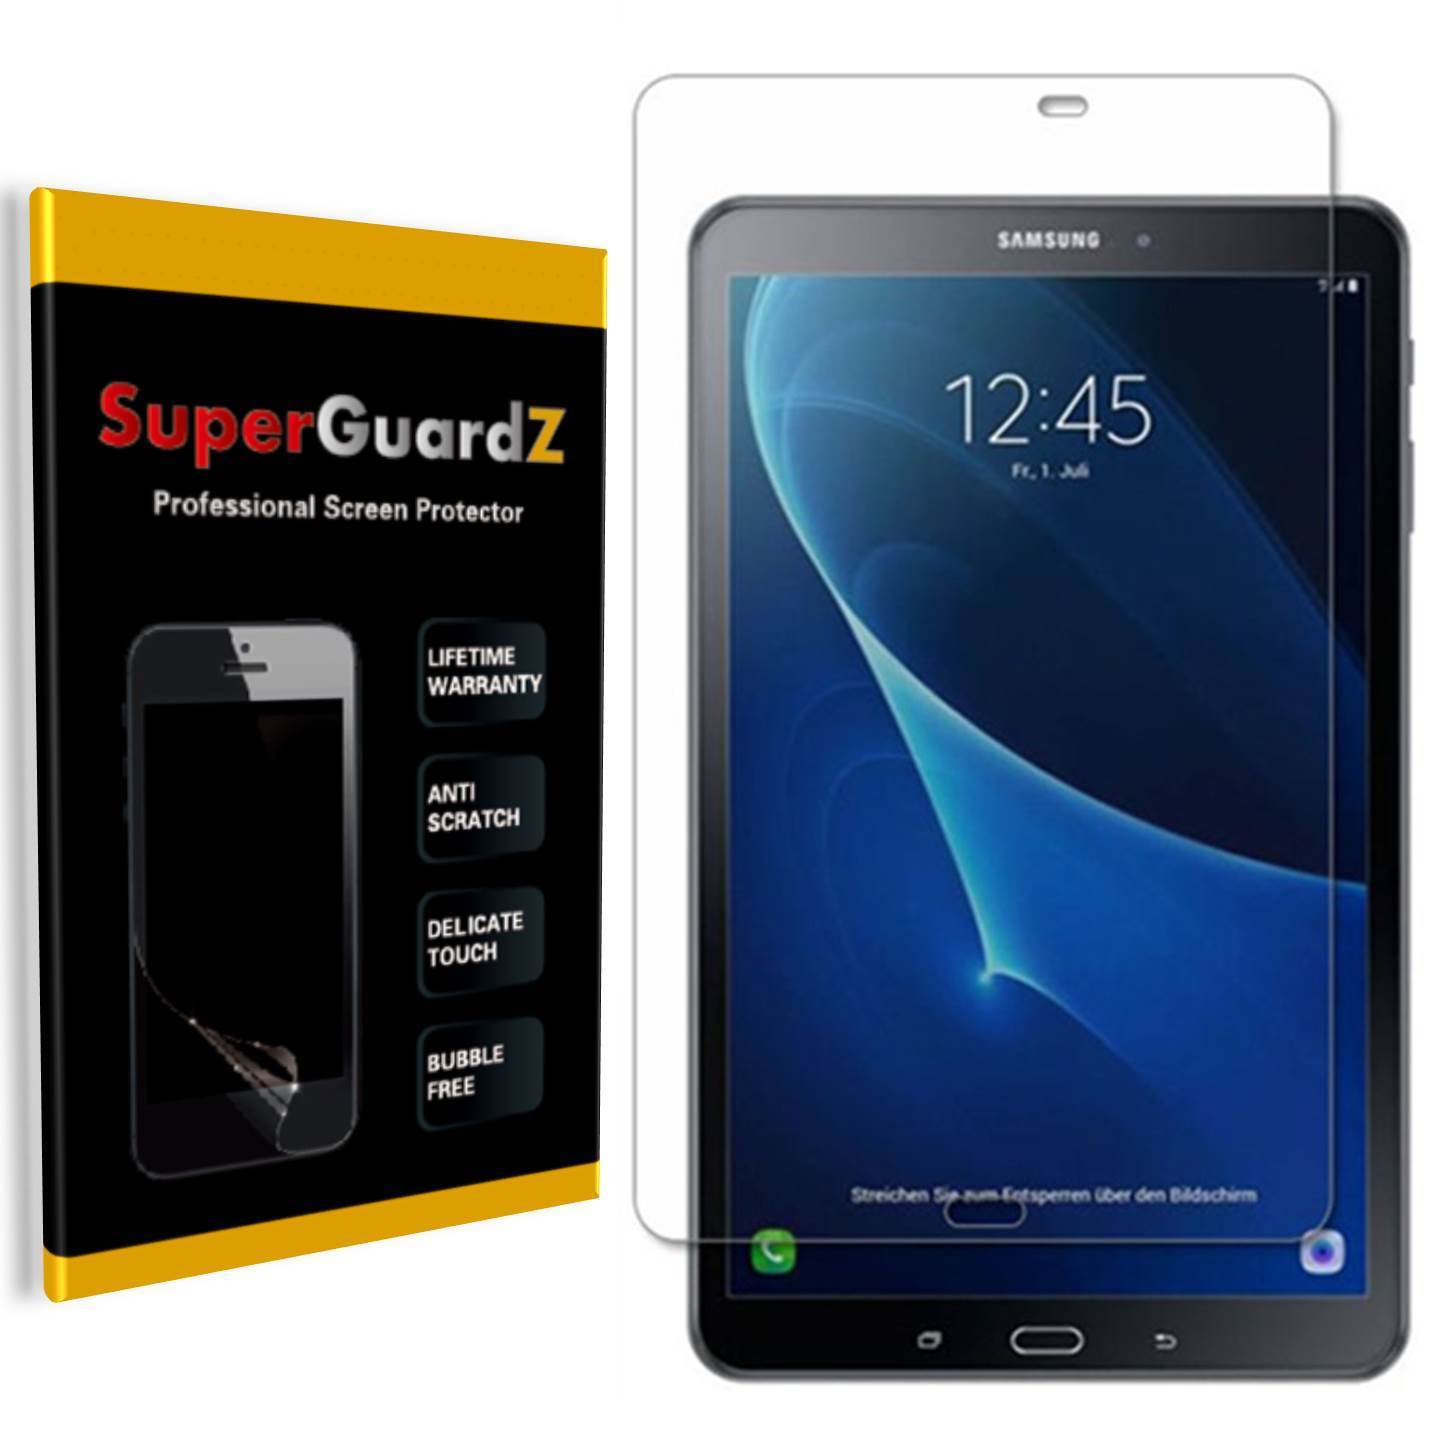 3X SuperGuardZ® Clear Screen Protector Film For Samsung Galaxy Tab A 10.1 (2016) SuperGuardZ 3244673132937312313